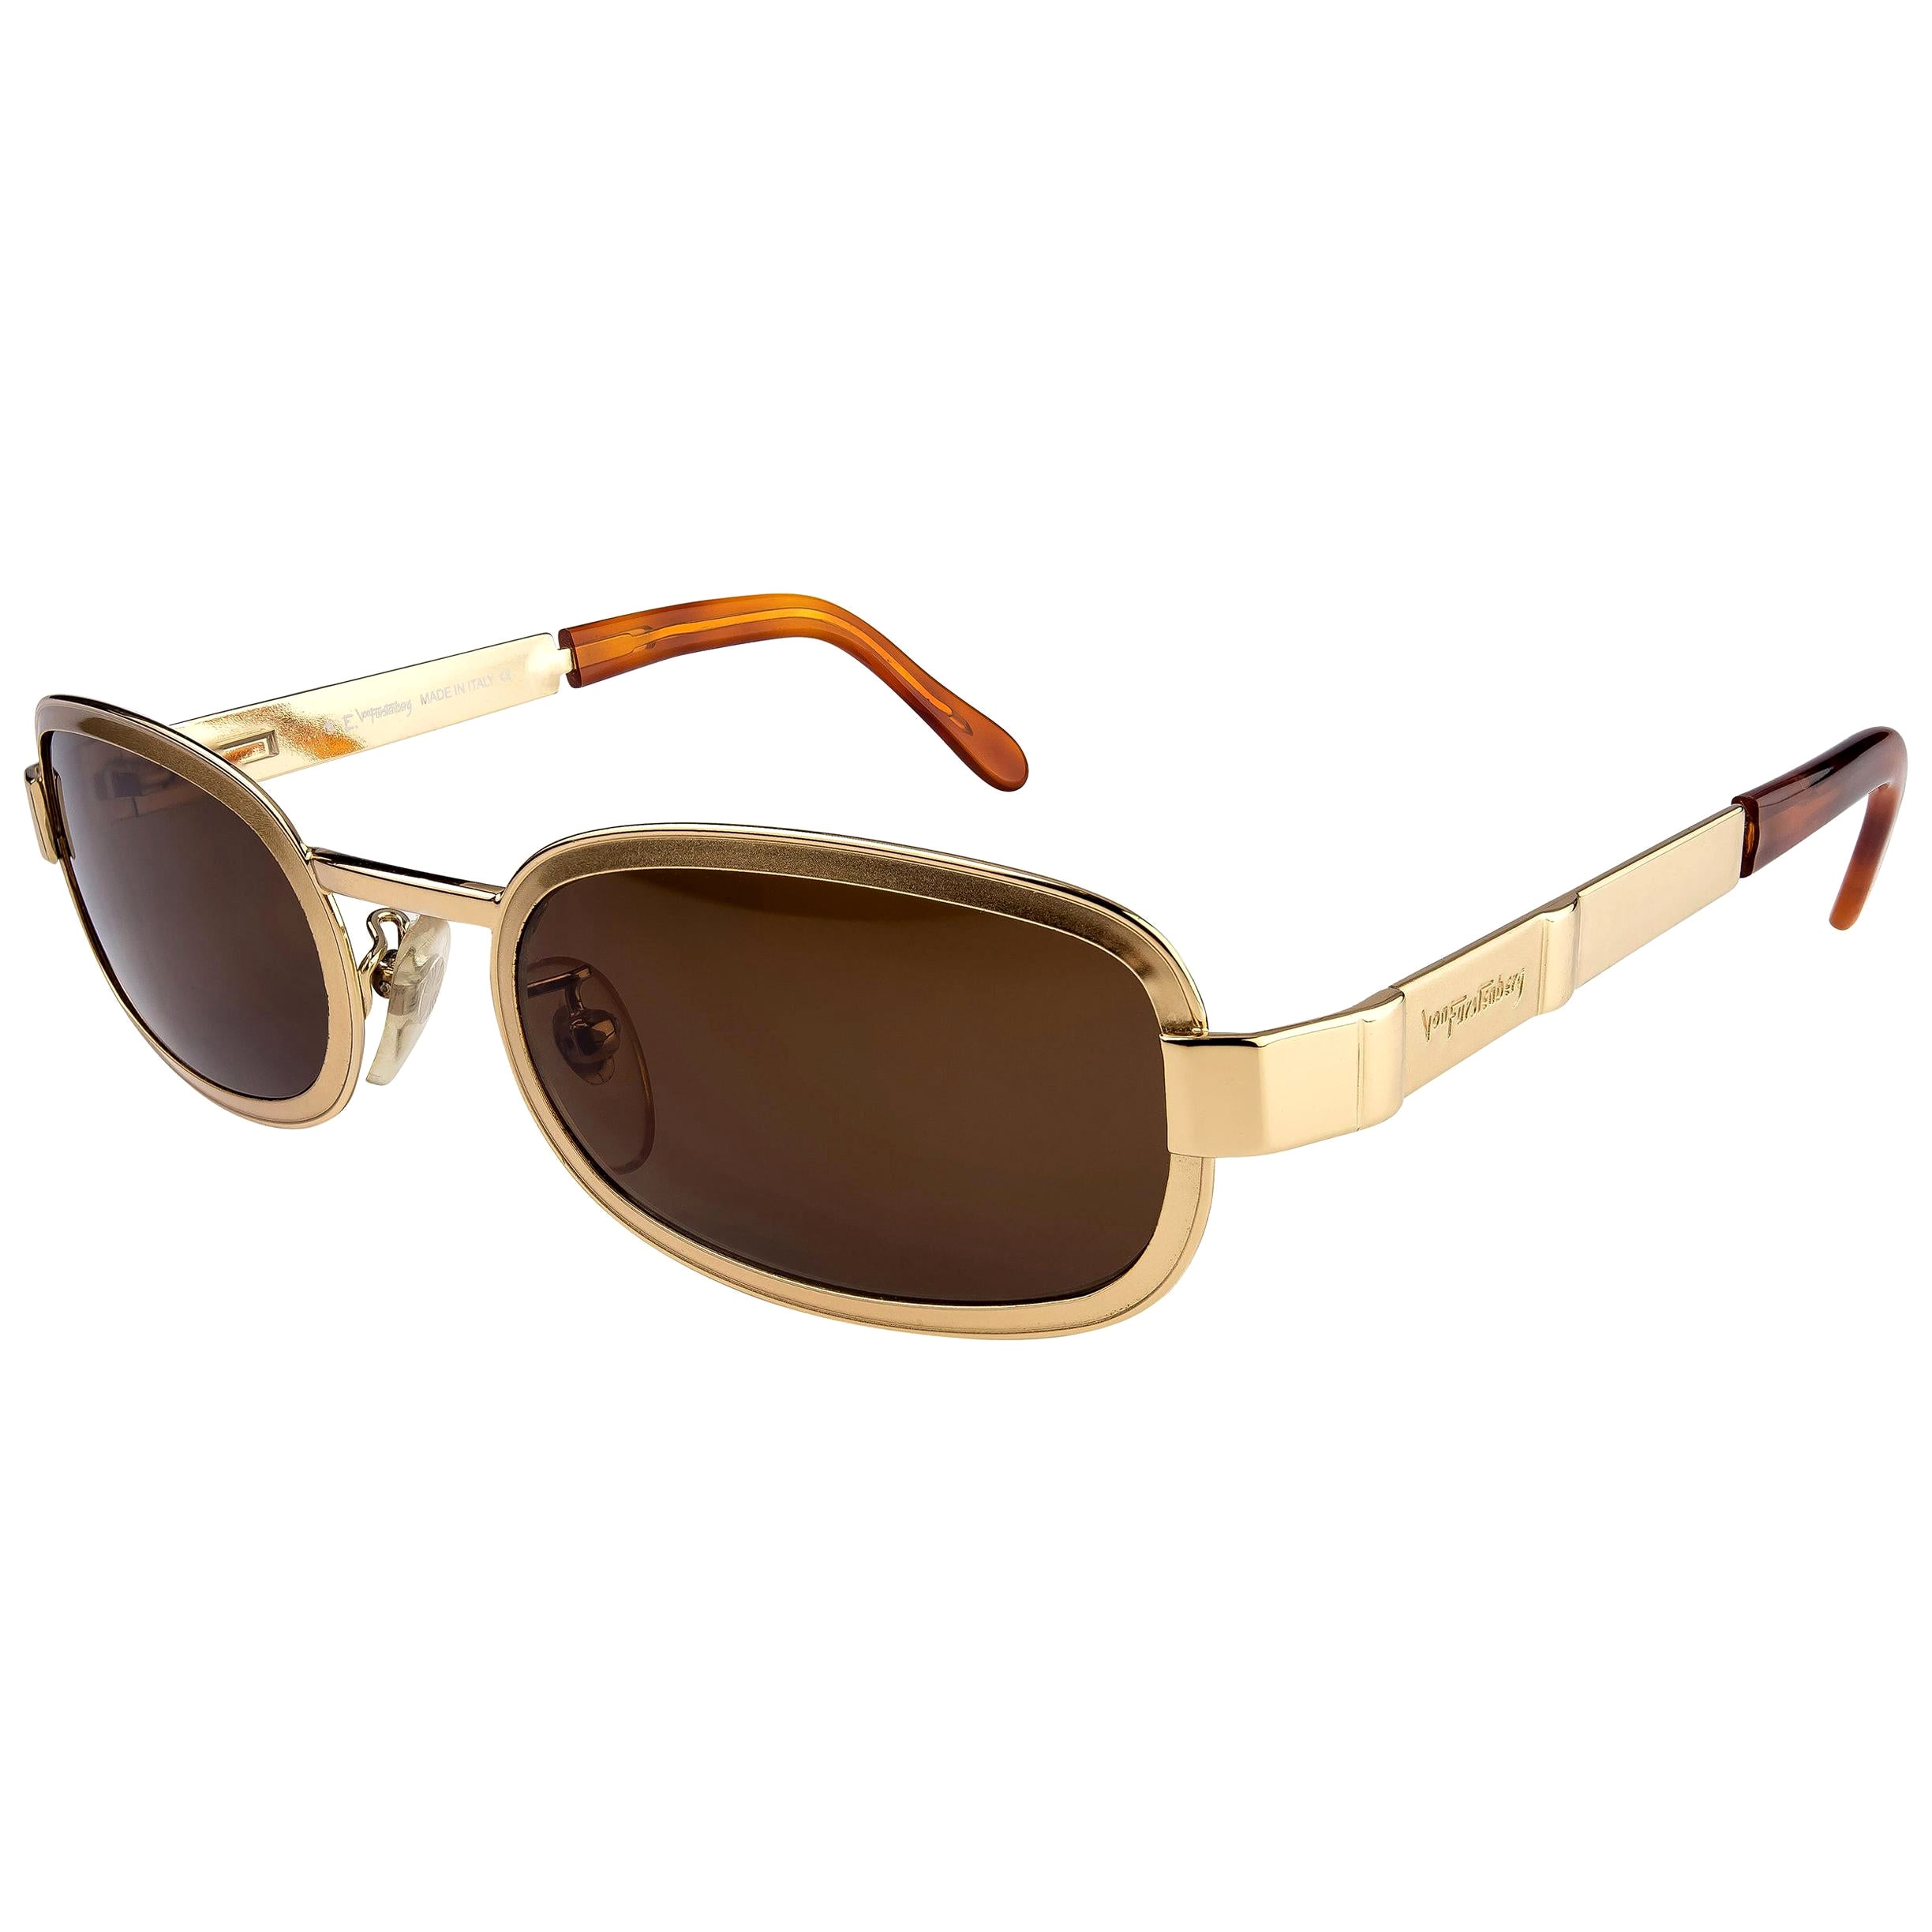 Von Furstenberg golden vintage sunglasses 80s For Sale